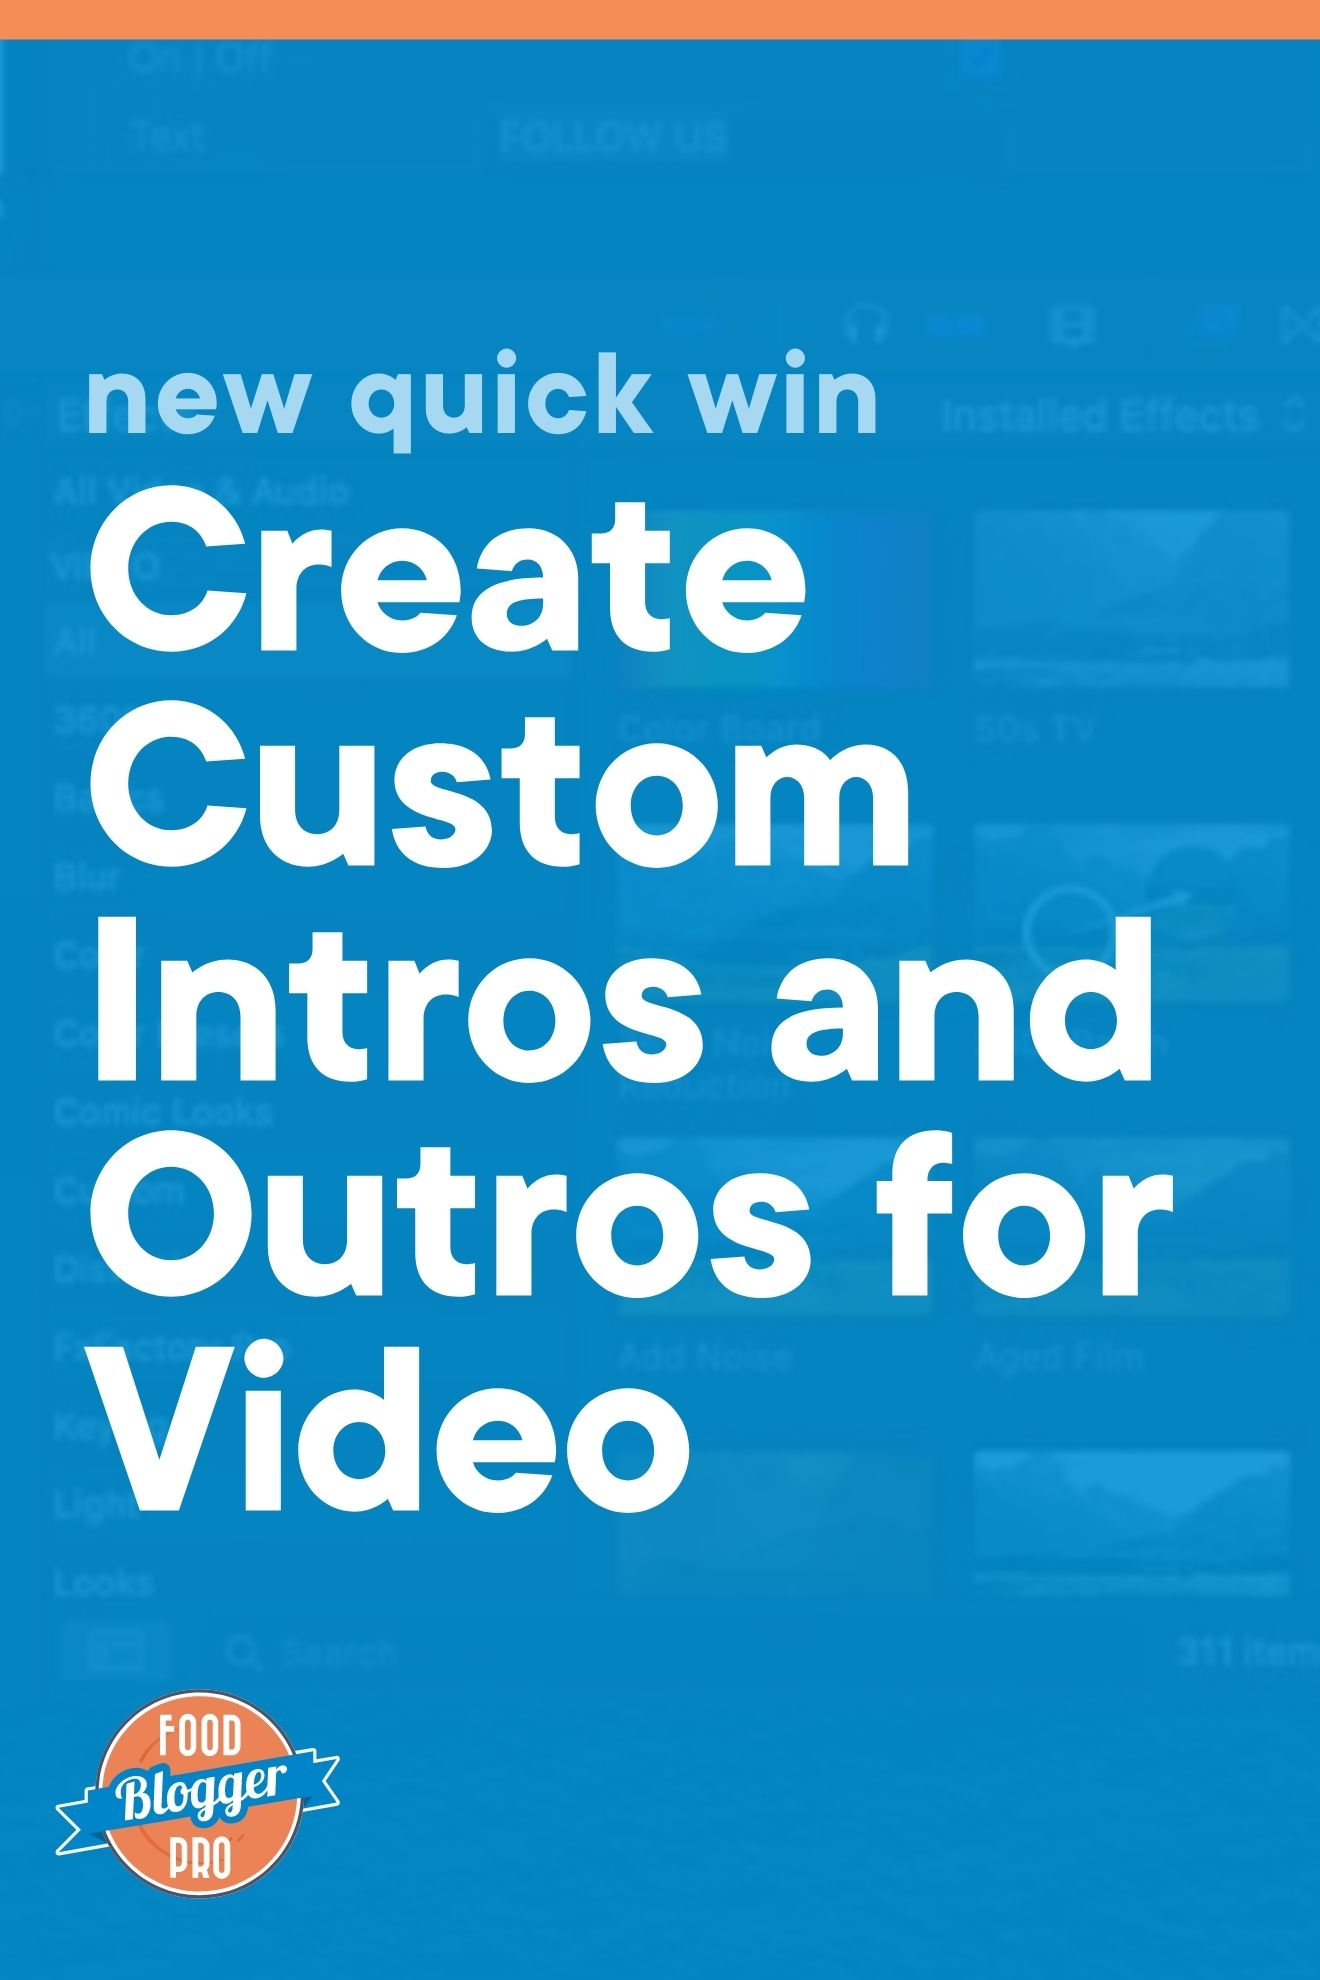 FinalCutPro蓝后台截图读作“新QuickWin:创建自定义视频Intros